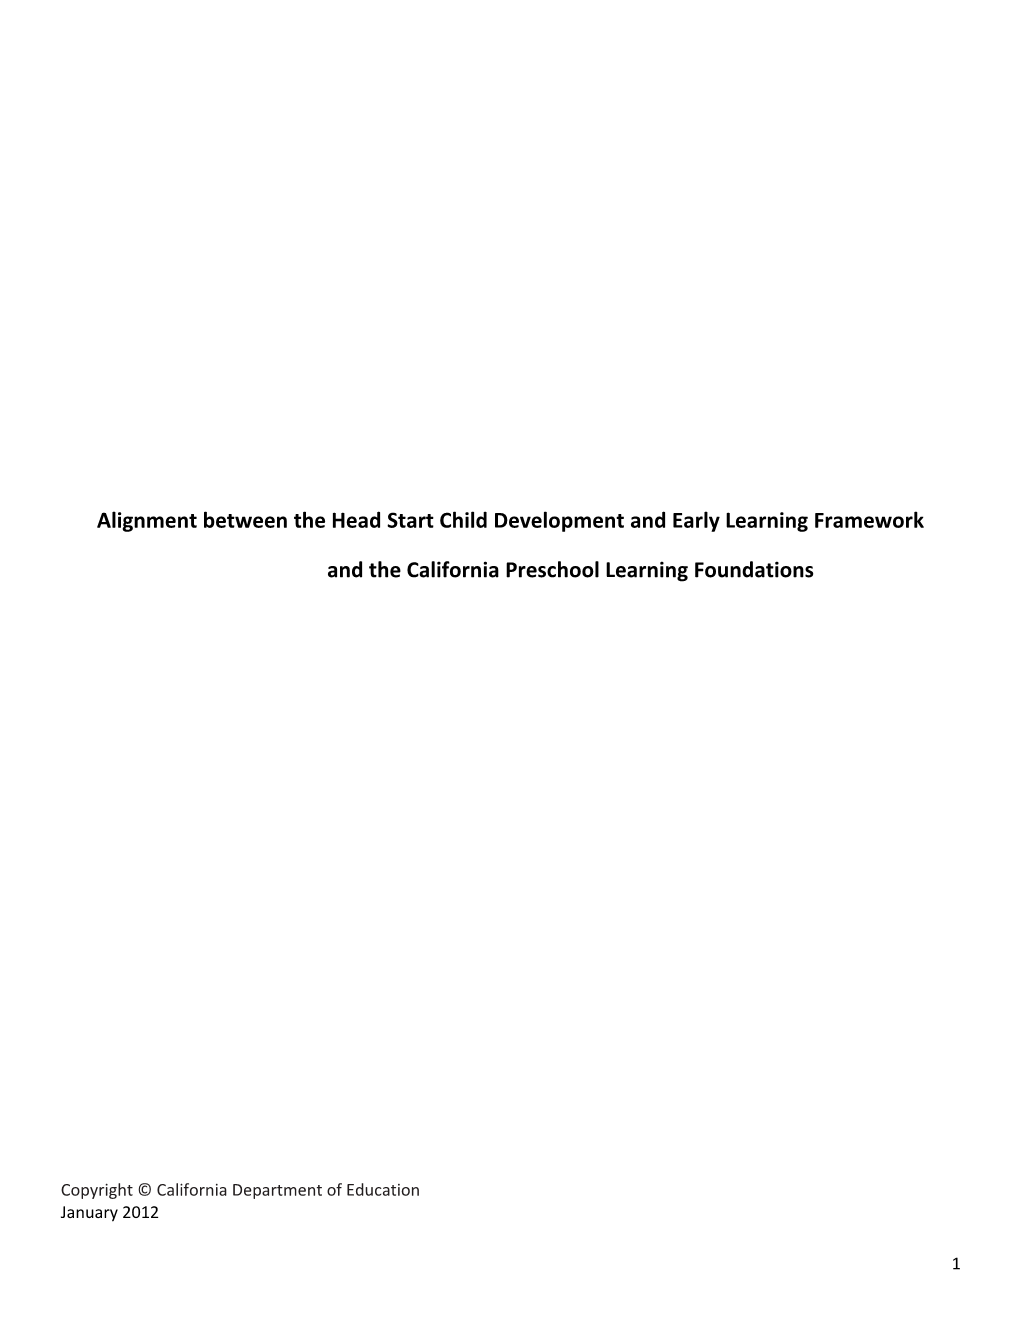 Alignment - Child Development (CA Dept of Education)